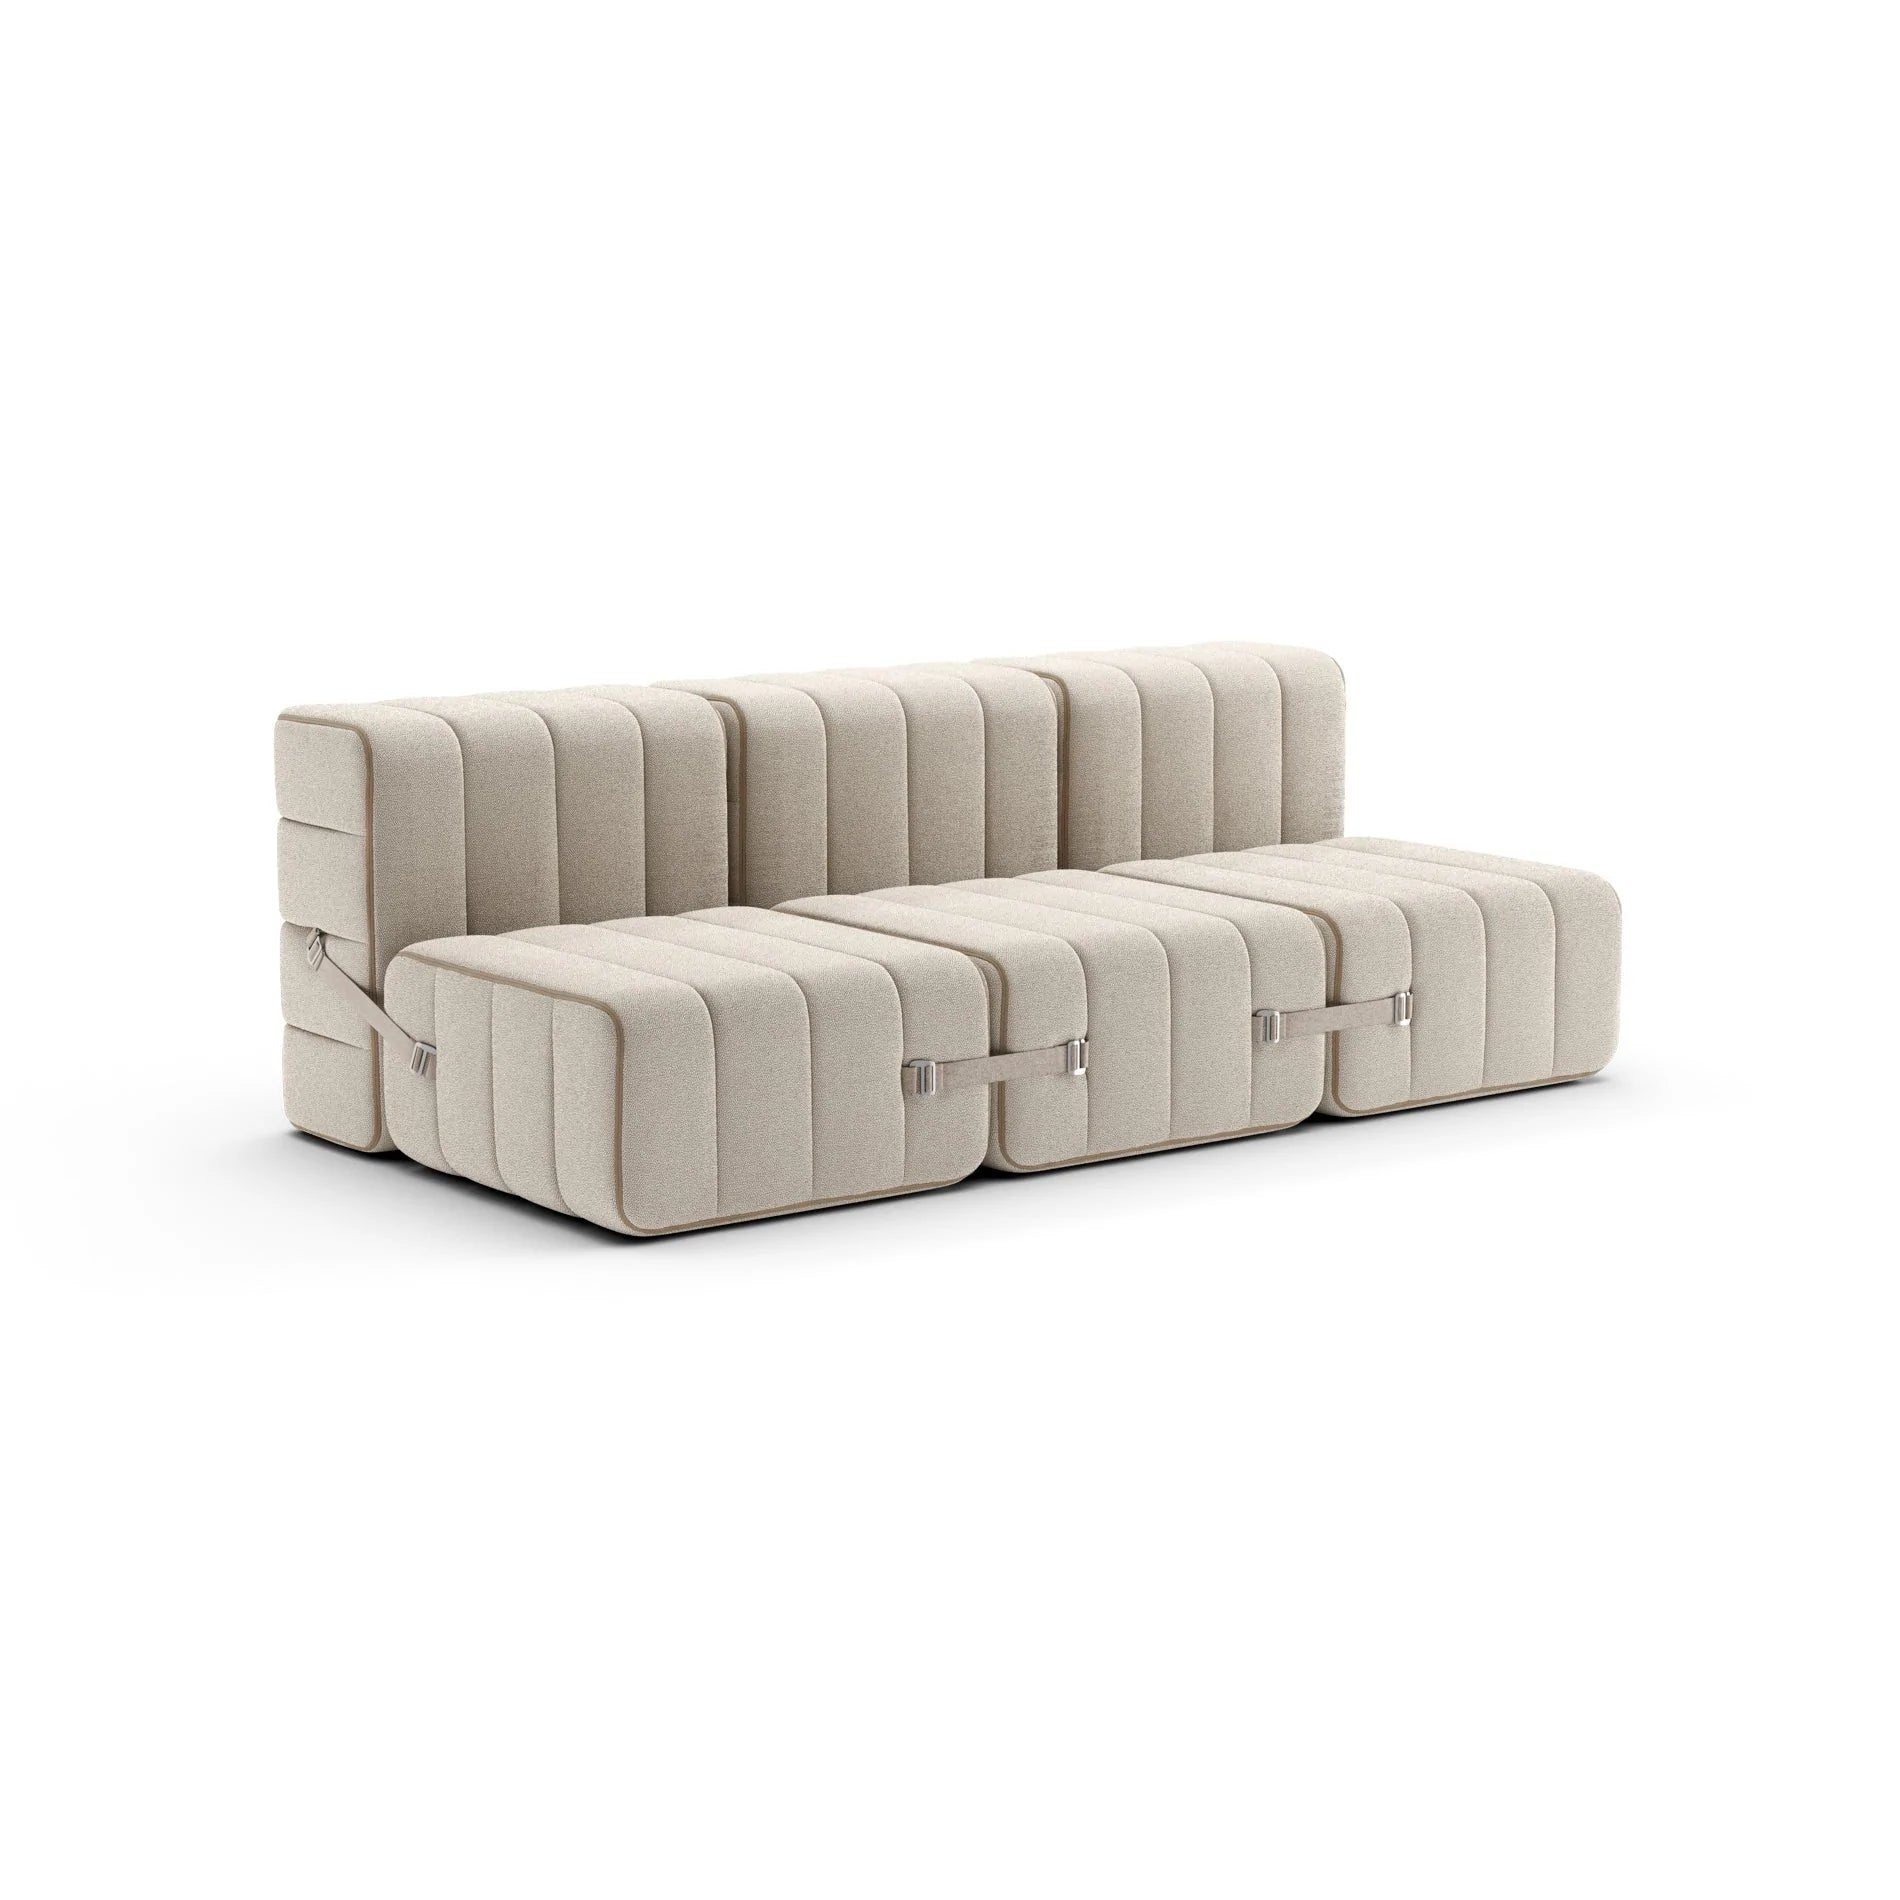 Curt modular sofa system - Sera Calla sofas from Ambivalenz